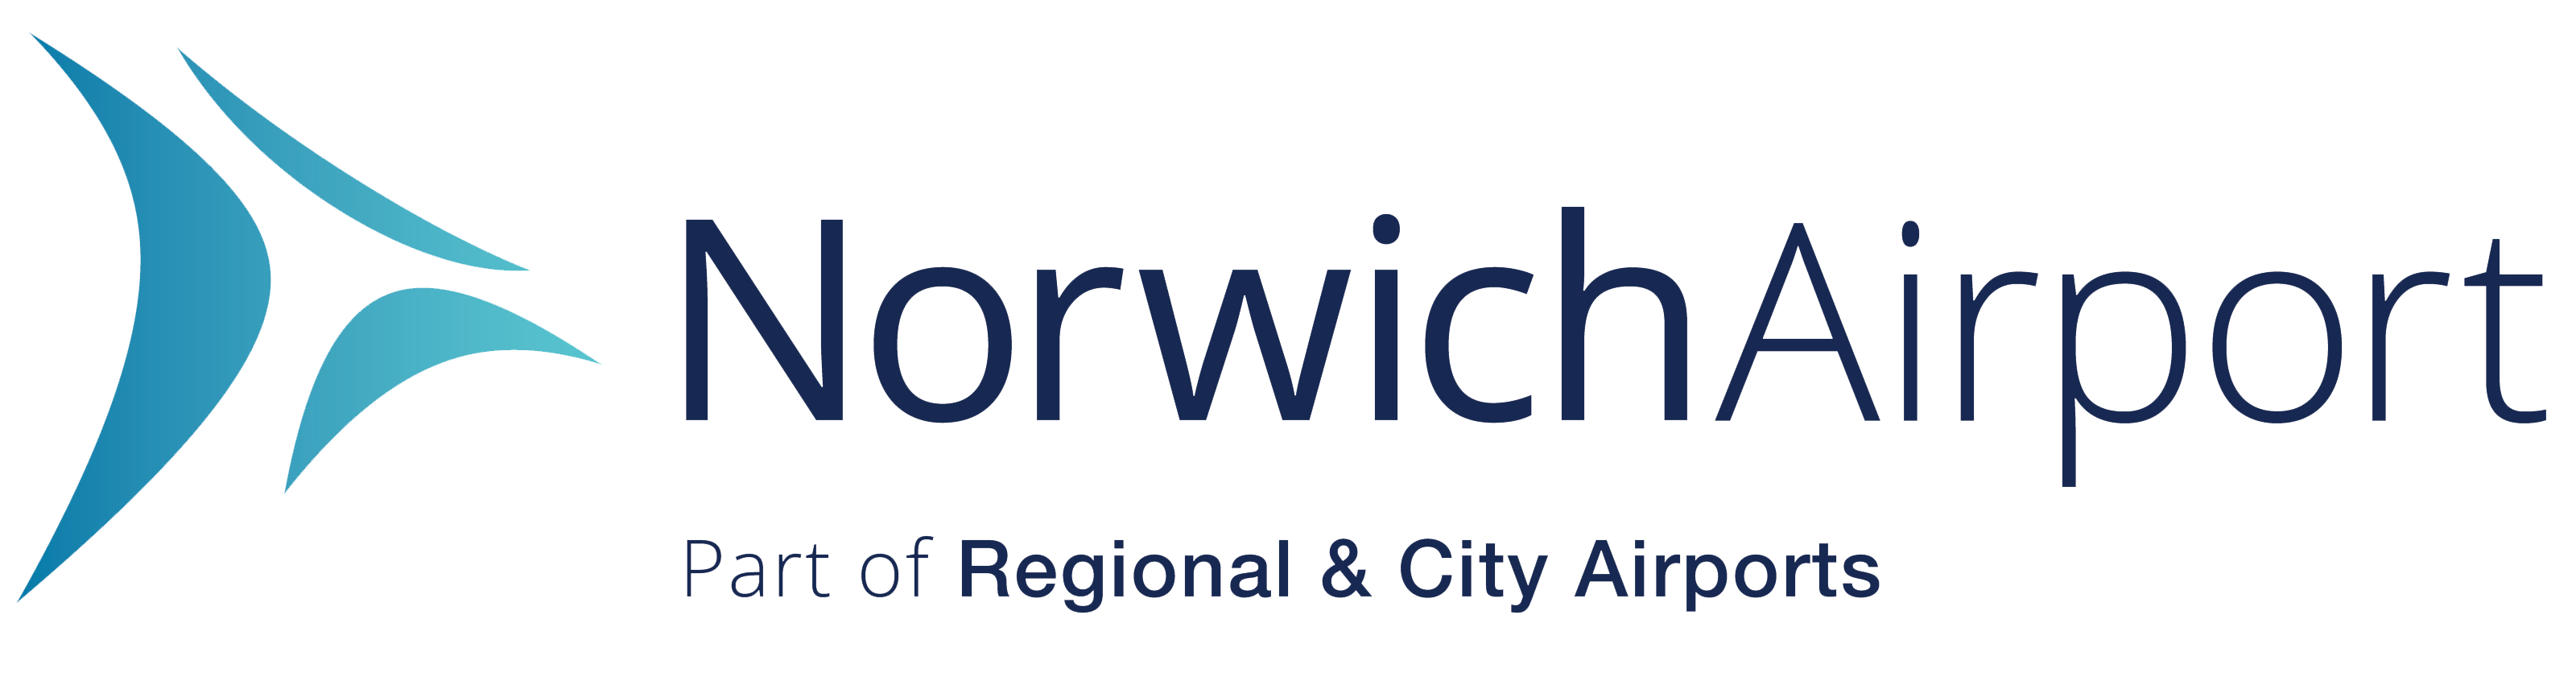 Norwich airport logo